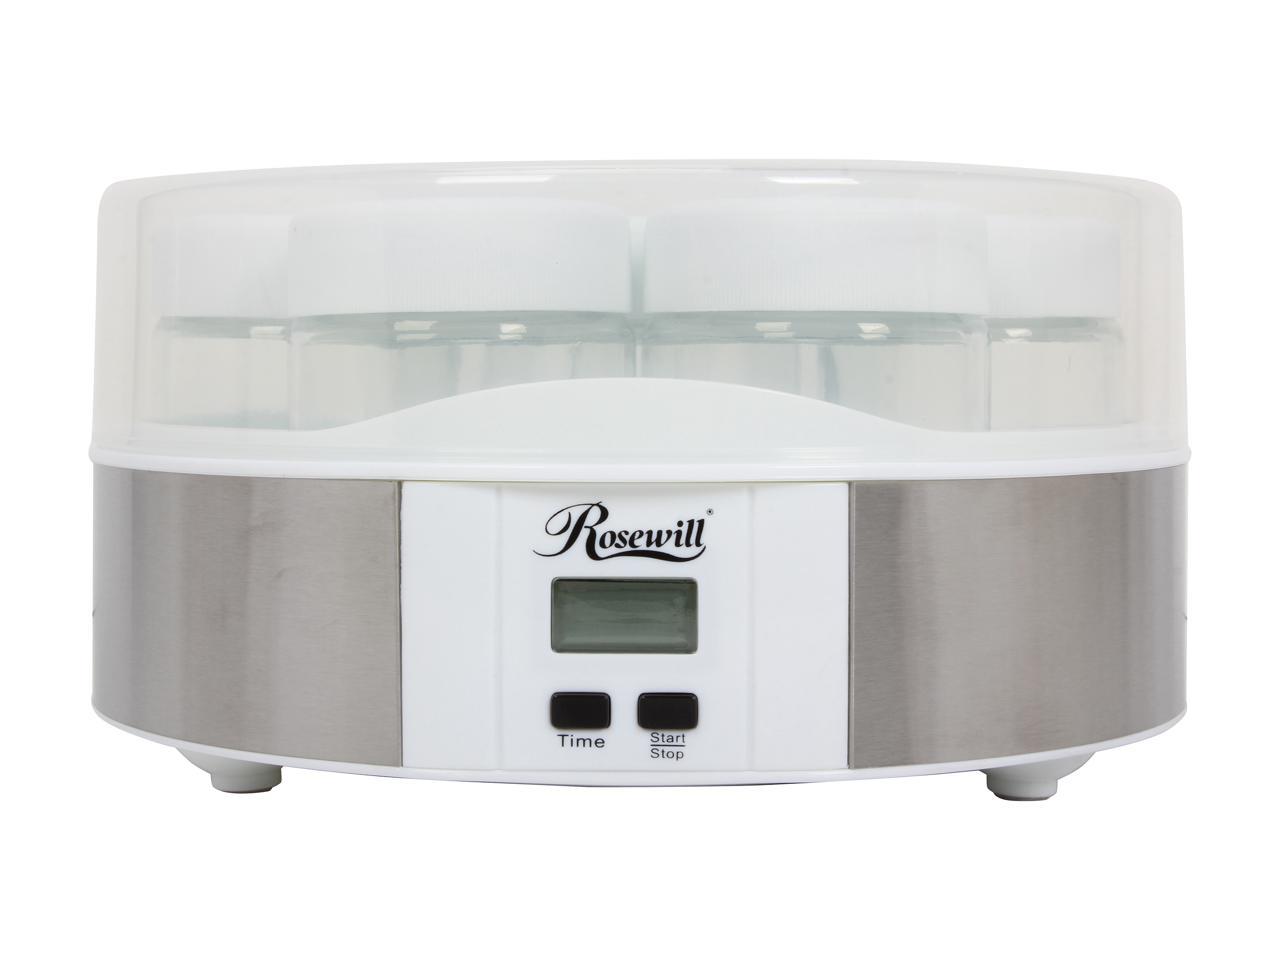 Rosewill RHYM-13001 Digital Yogurt Maker with 7 Glass Cups White 